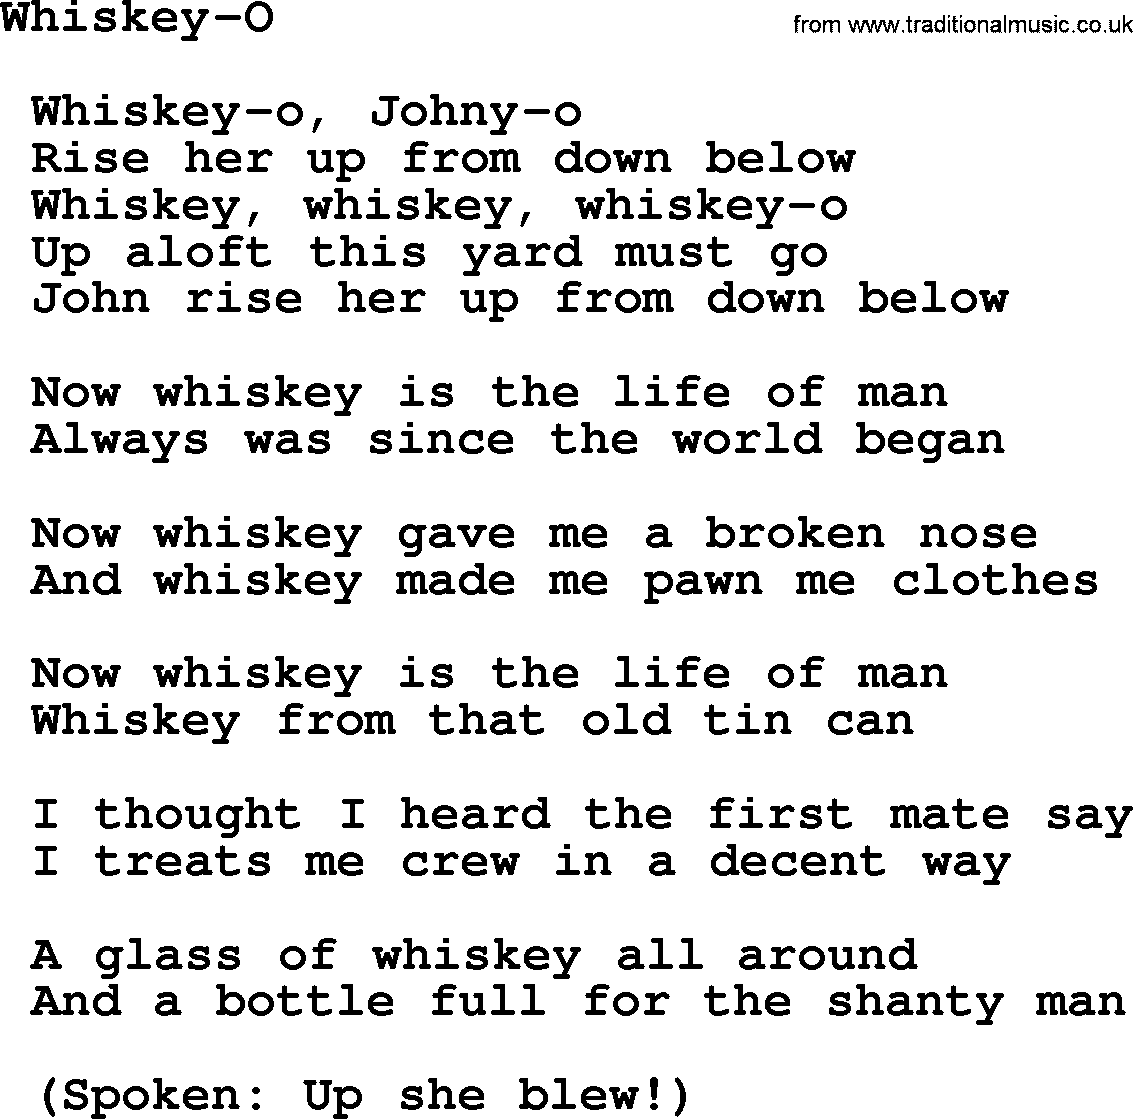 Sea Song or Shantie: Whiskey-o, lyrics